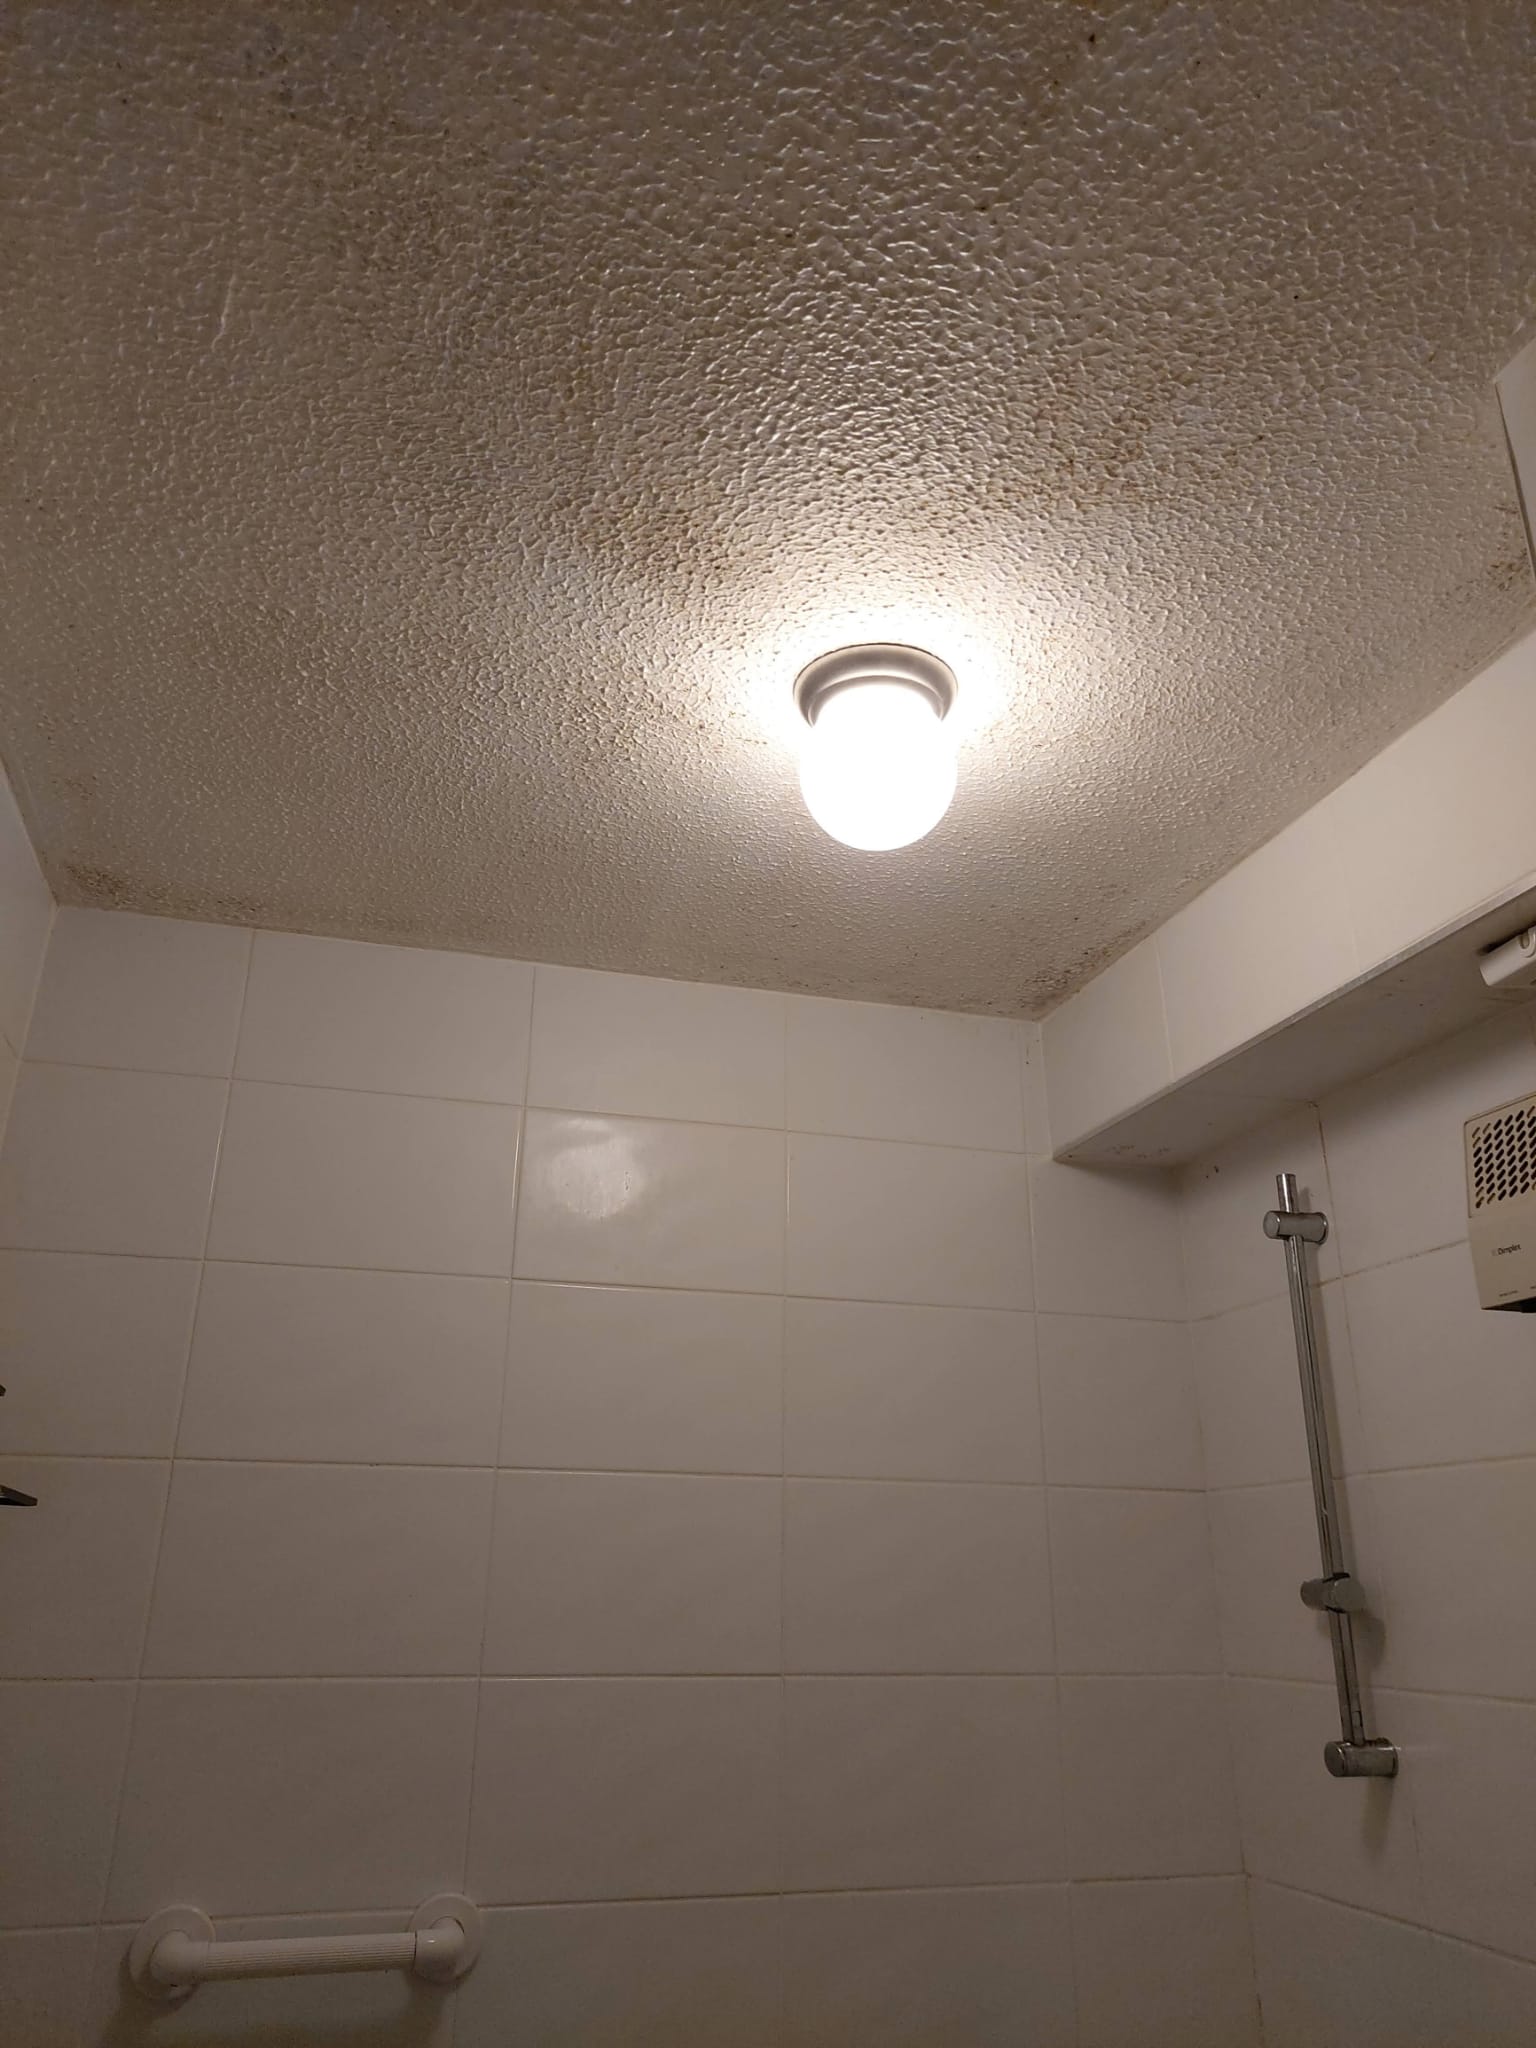 Ceiling Washing Bathroom After